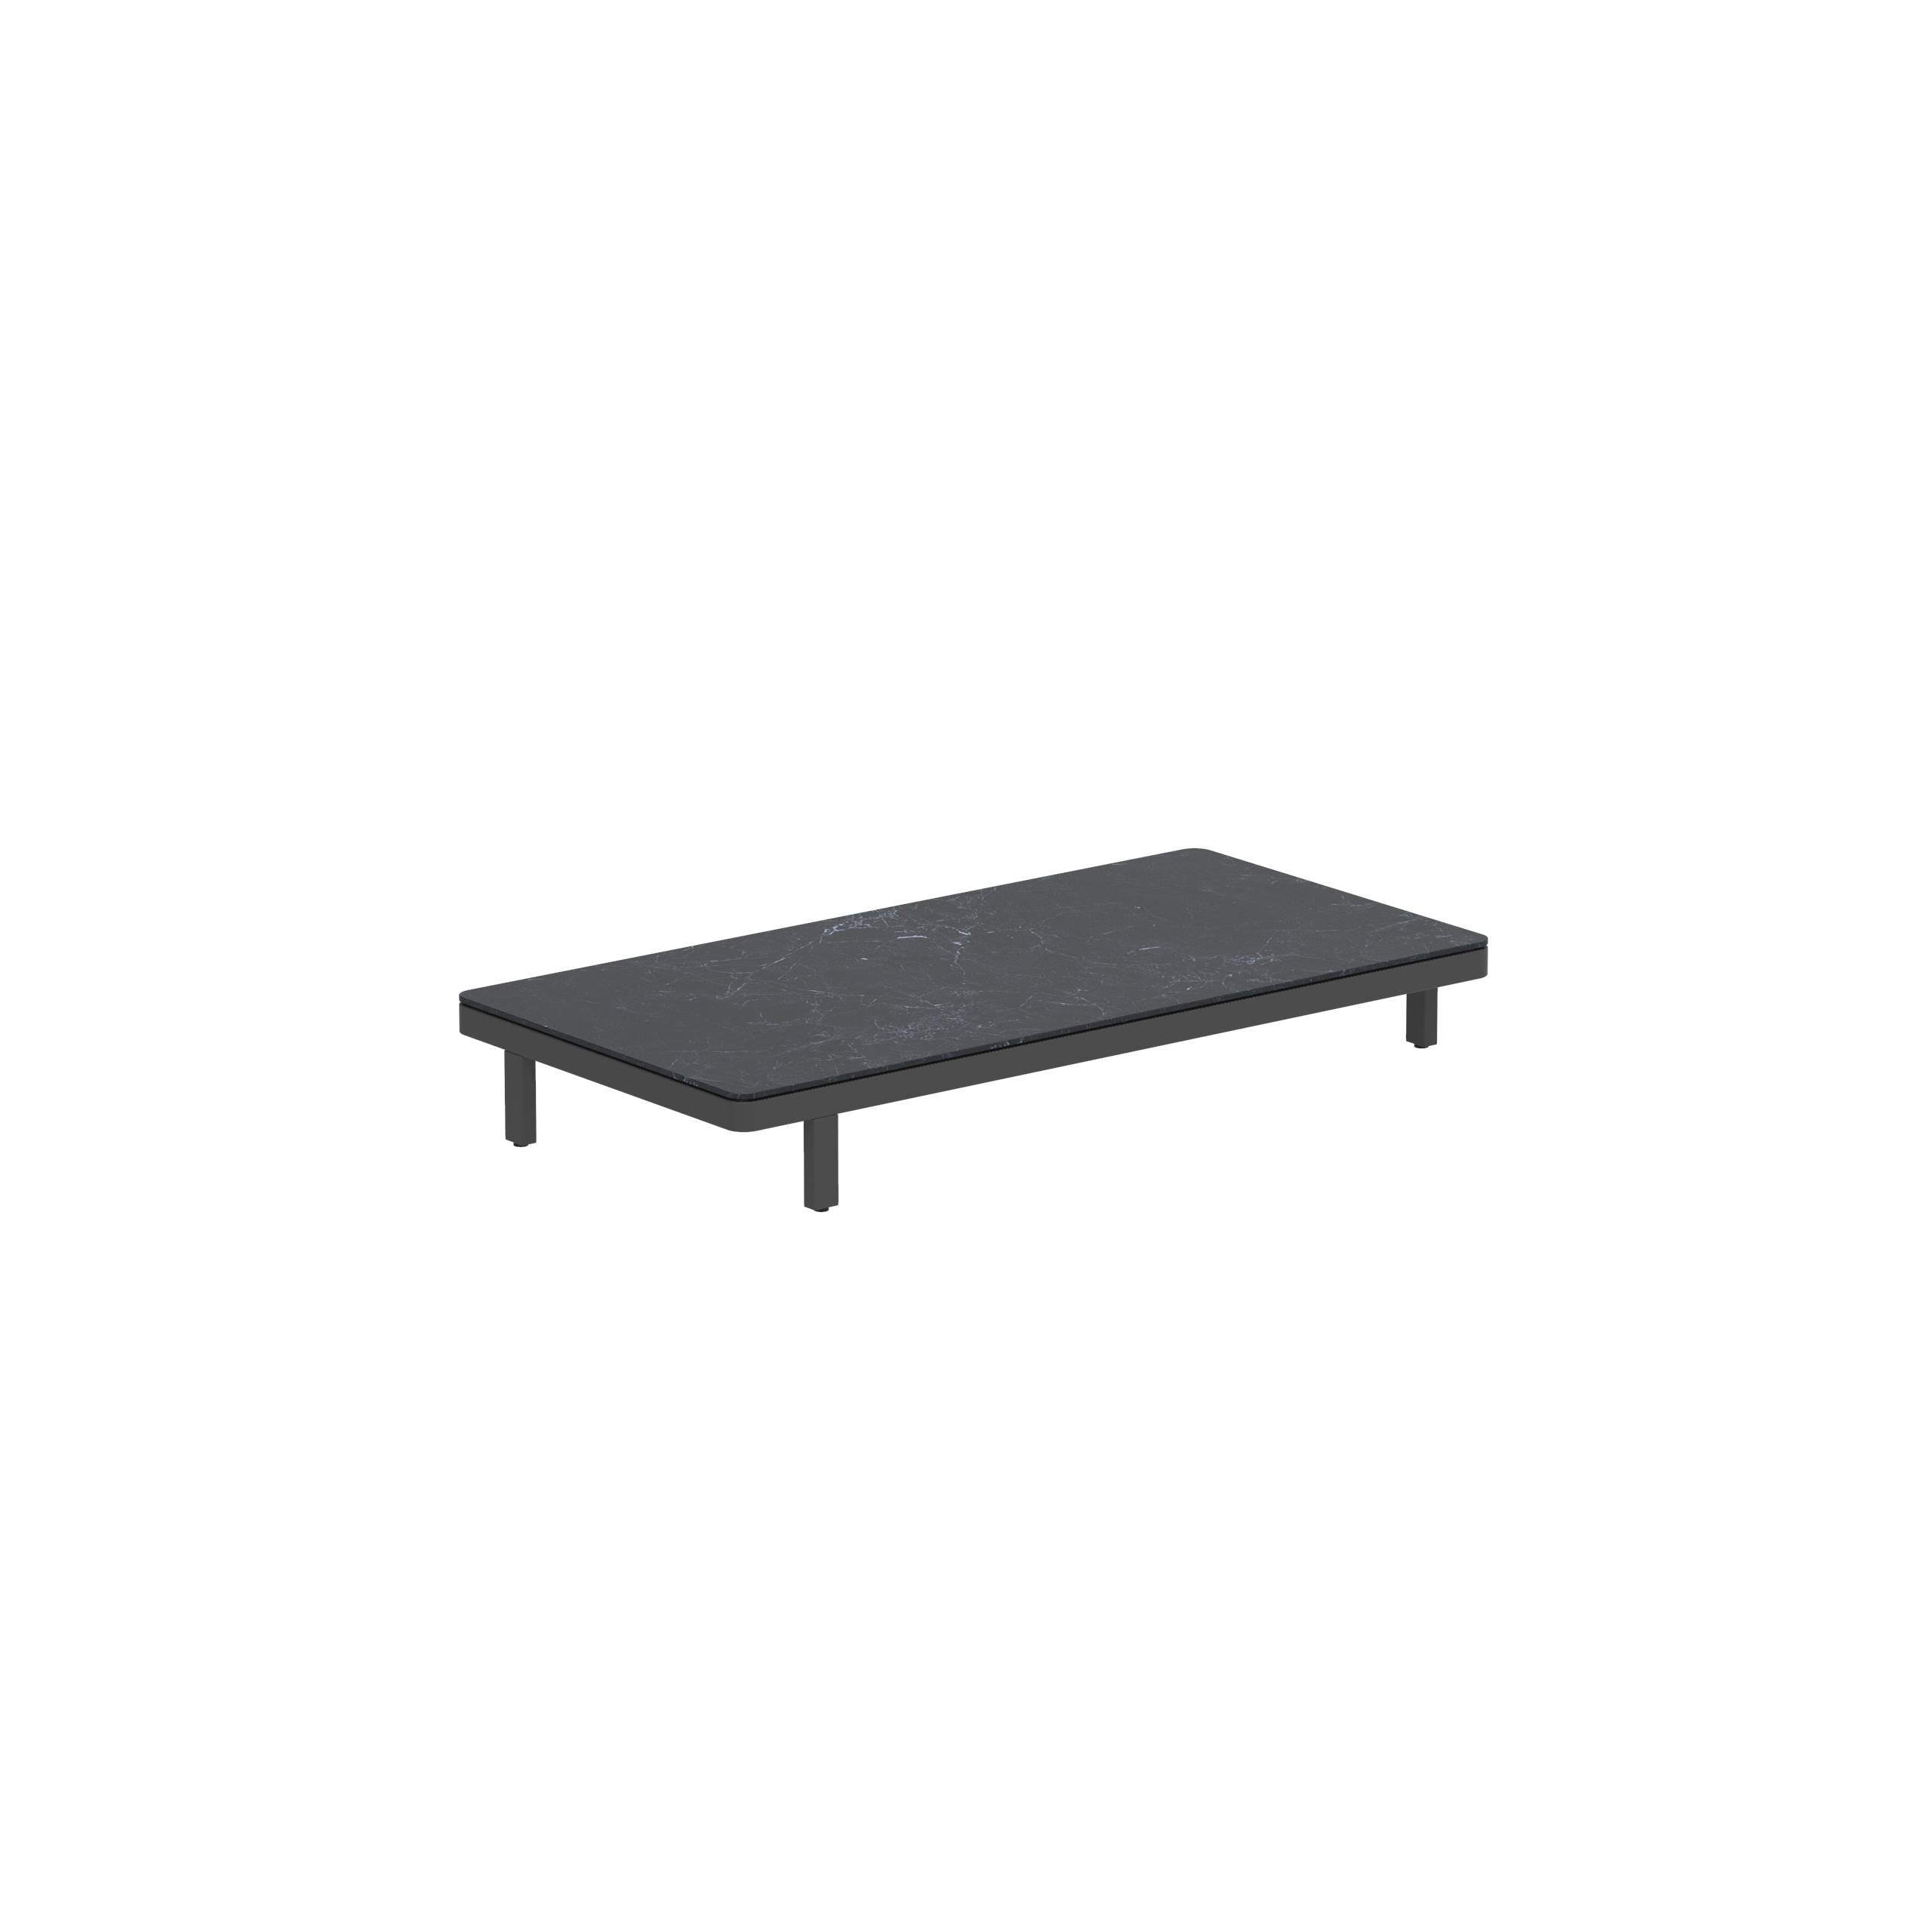 Alura Lounge 160 Ltl Table 160x80x23cm Black Ceramic Tabletop Nero Marquina